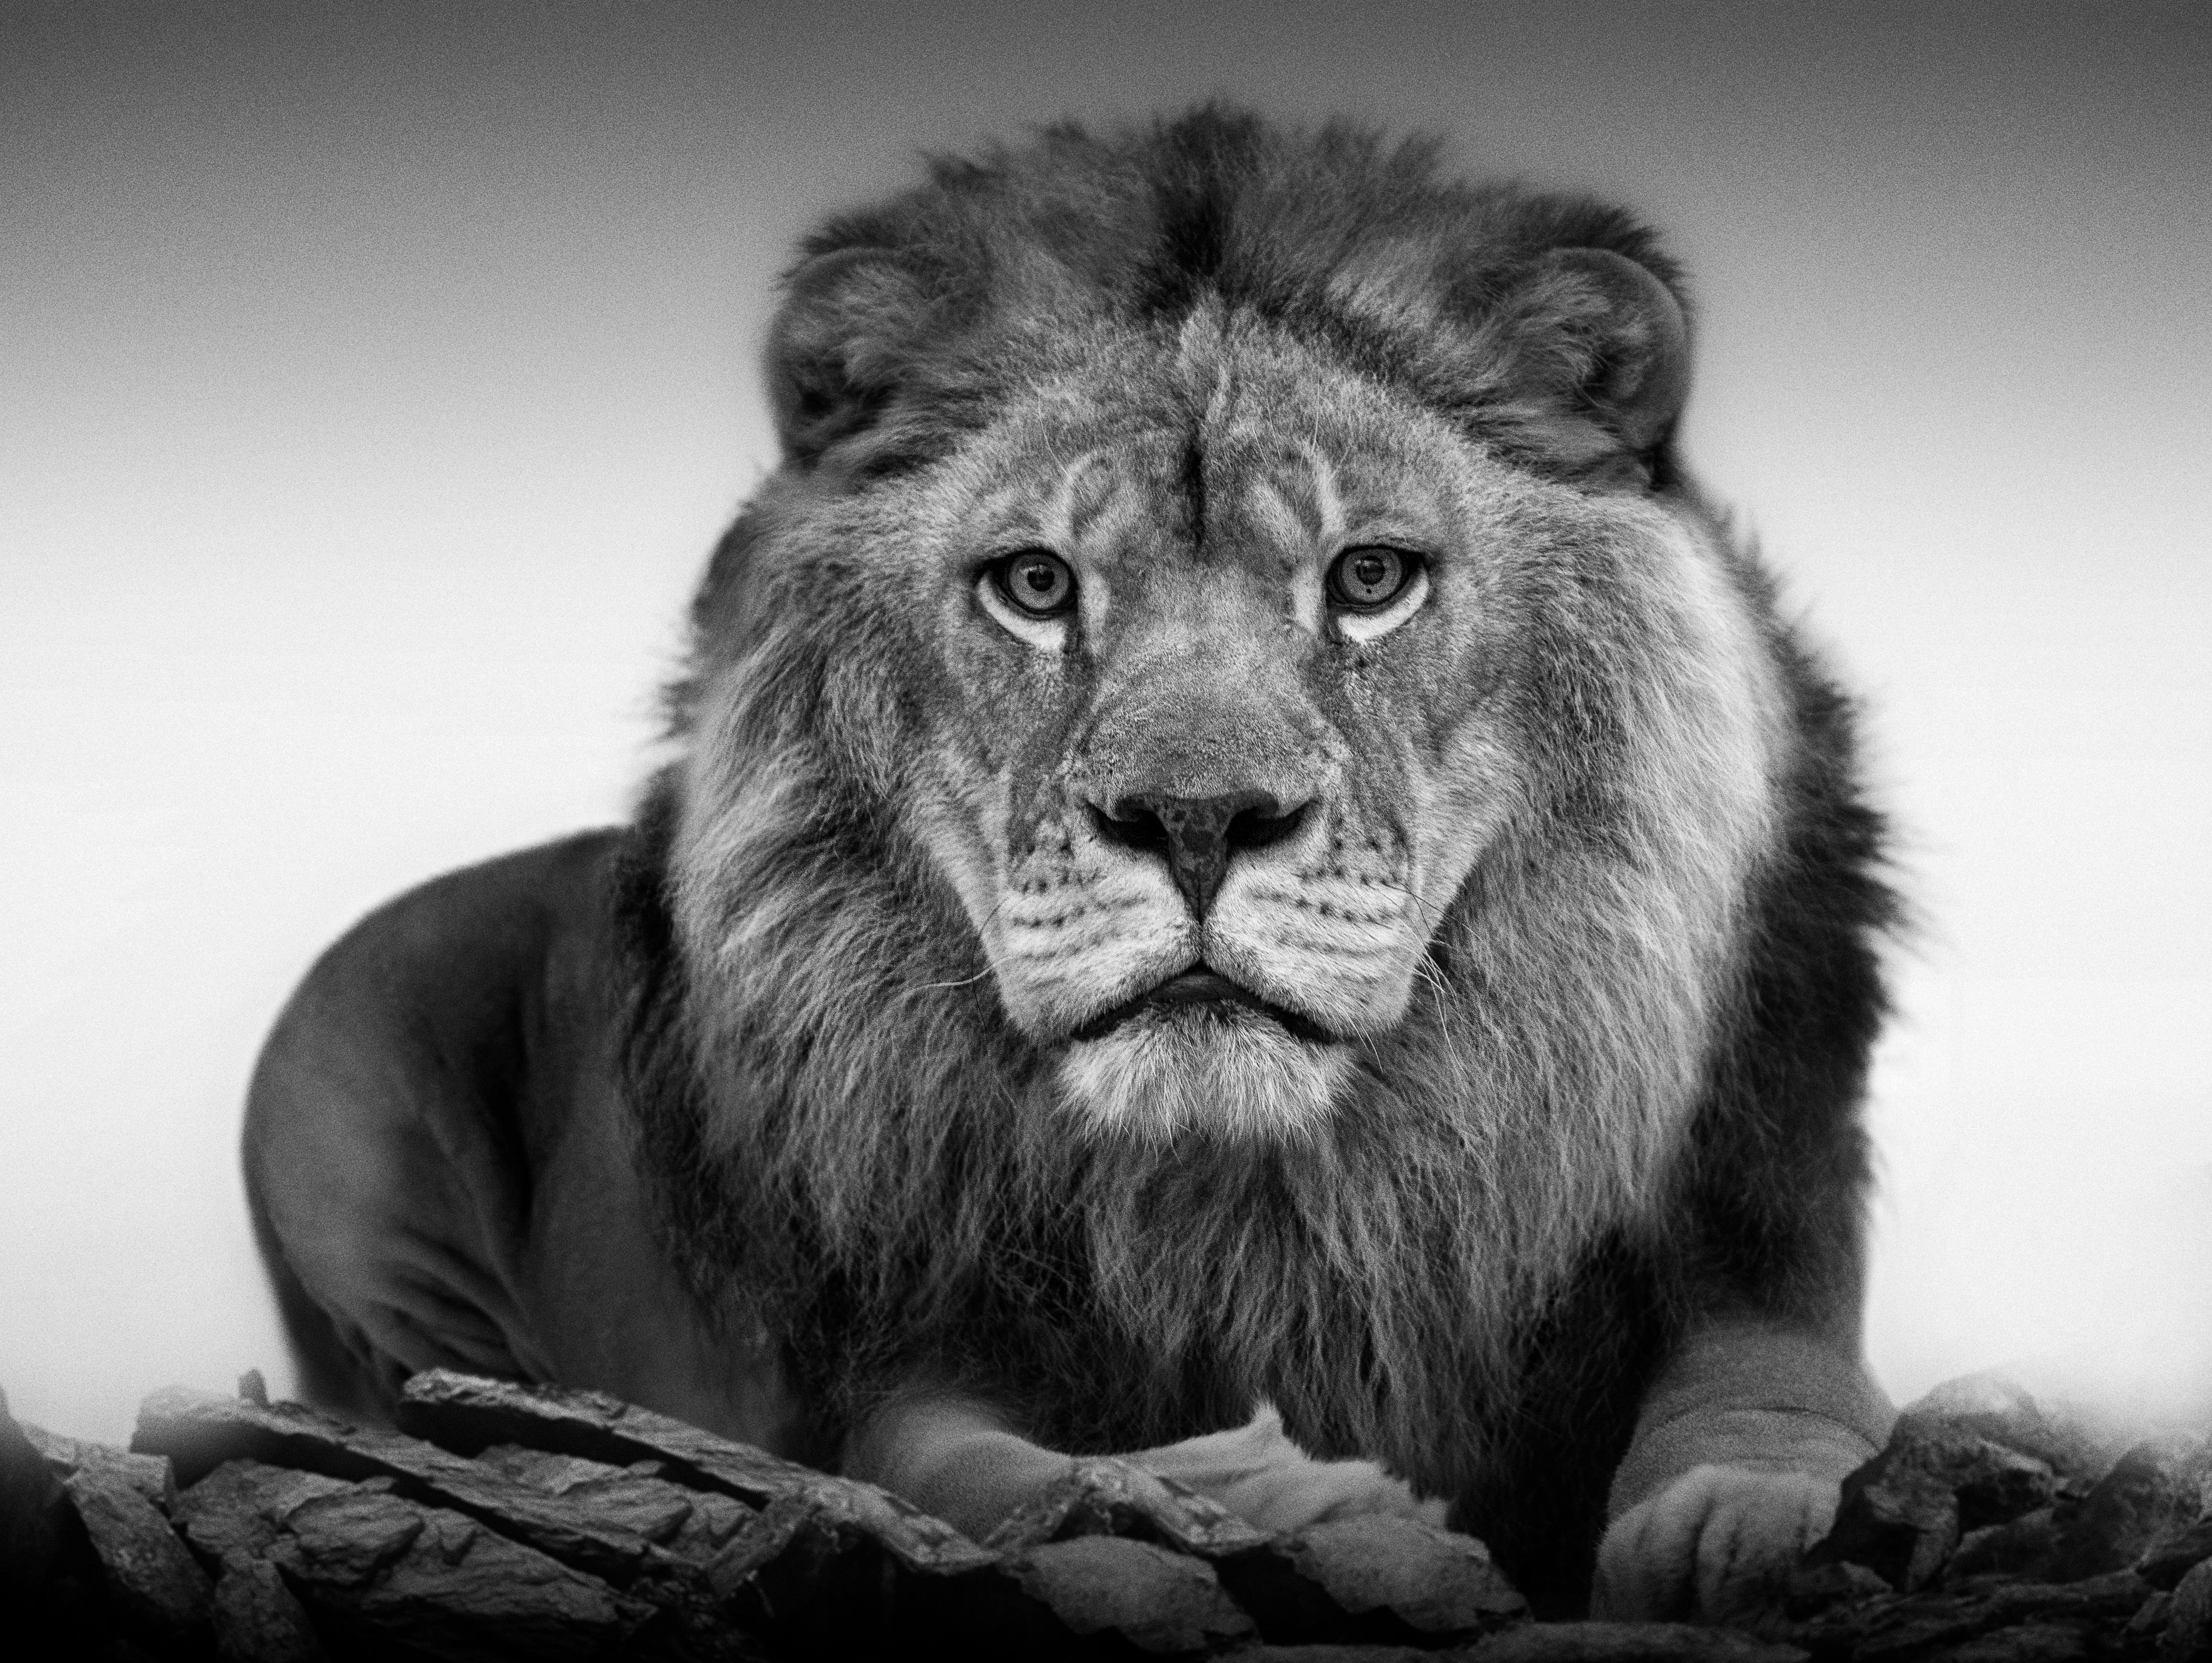 Shane Russeck Animal Print - 36x48 "Lion Portrait" Black and White Lion Photography, Photograph Unsigned Art